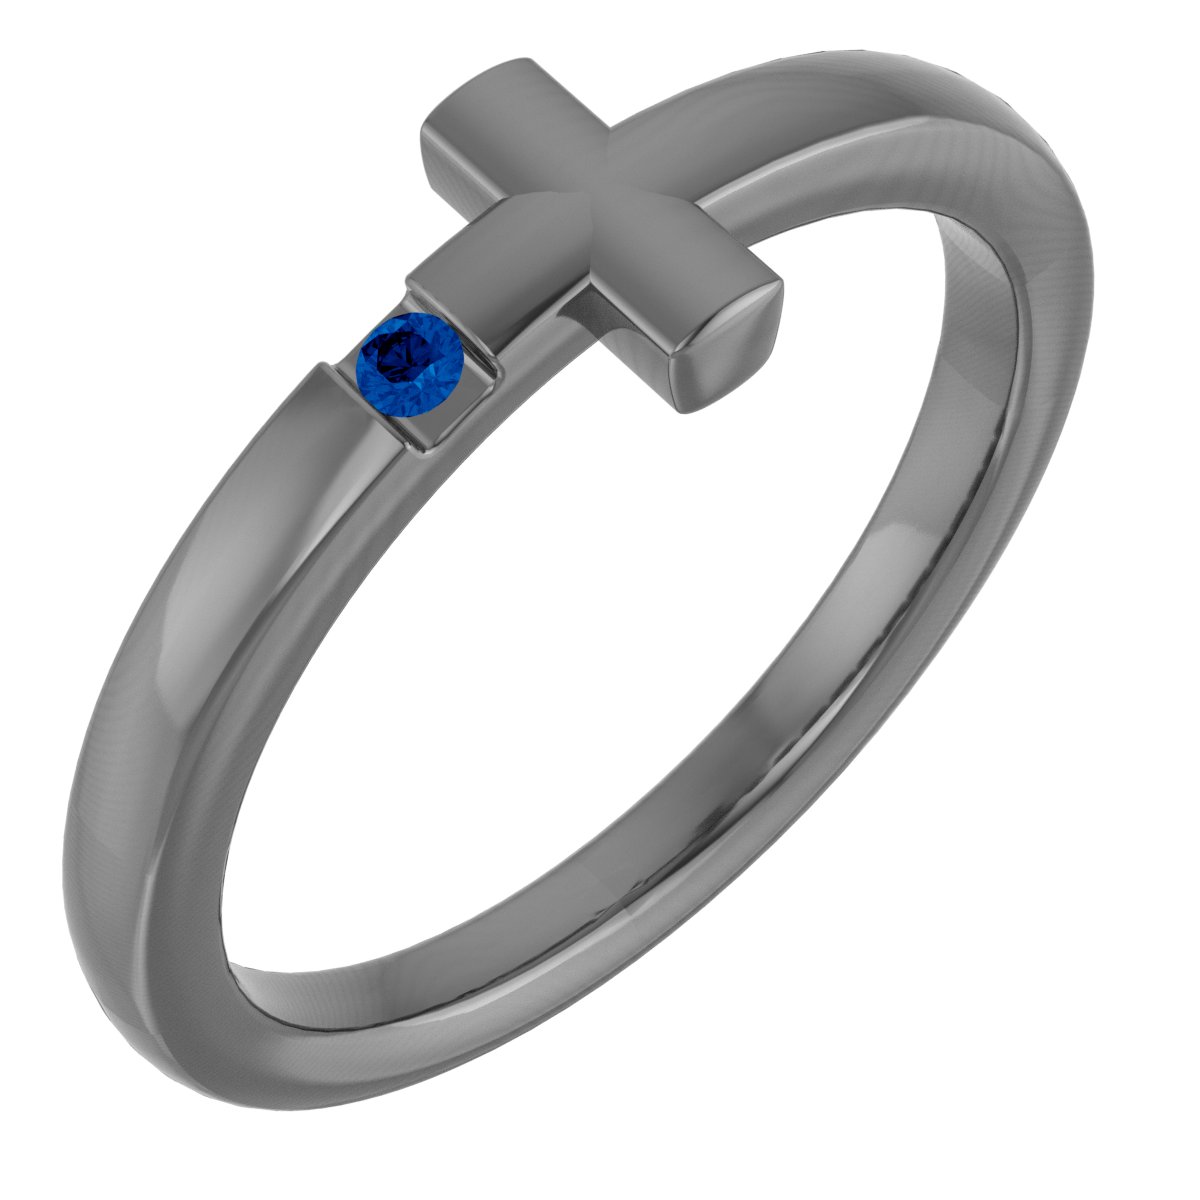 14K Yellow 1.5 mm Round Genuine Blue Sapphire Youth Cross Ring